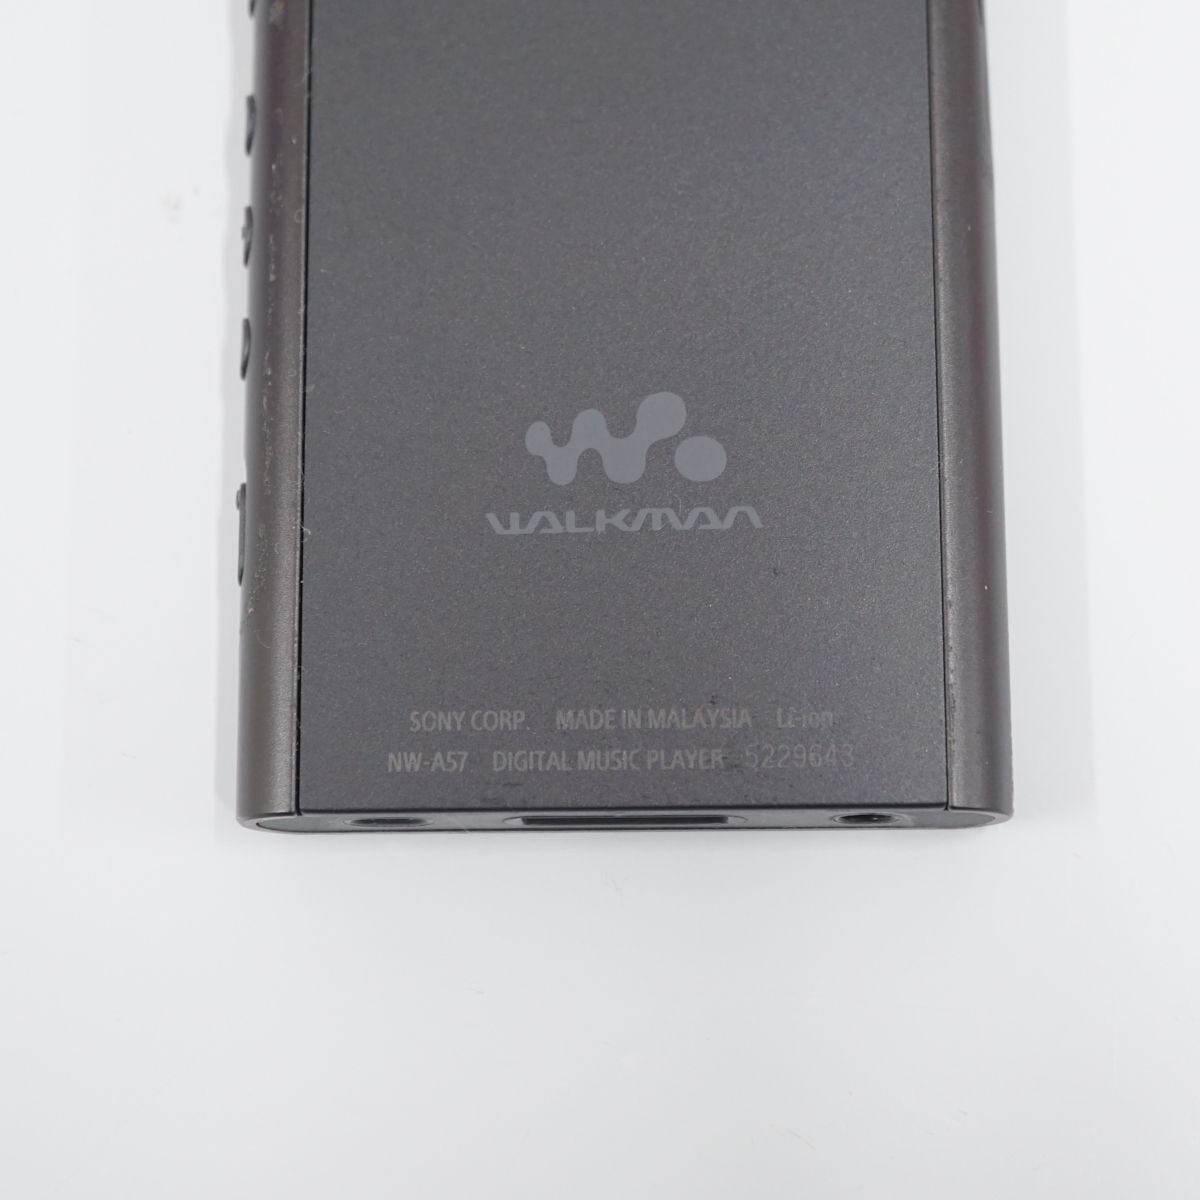 SONY Walkman ウォークマン NW-A57 64GB USED品 本体のみ グレイッシュブラック ハイレゾ Bluetooh 完動品 T  V8325